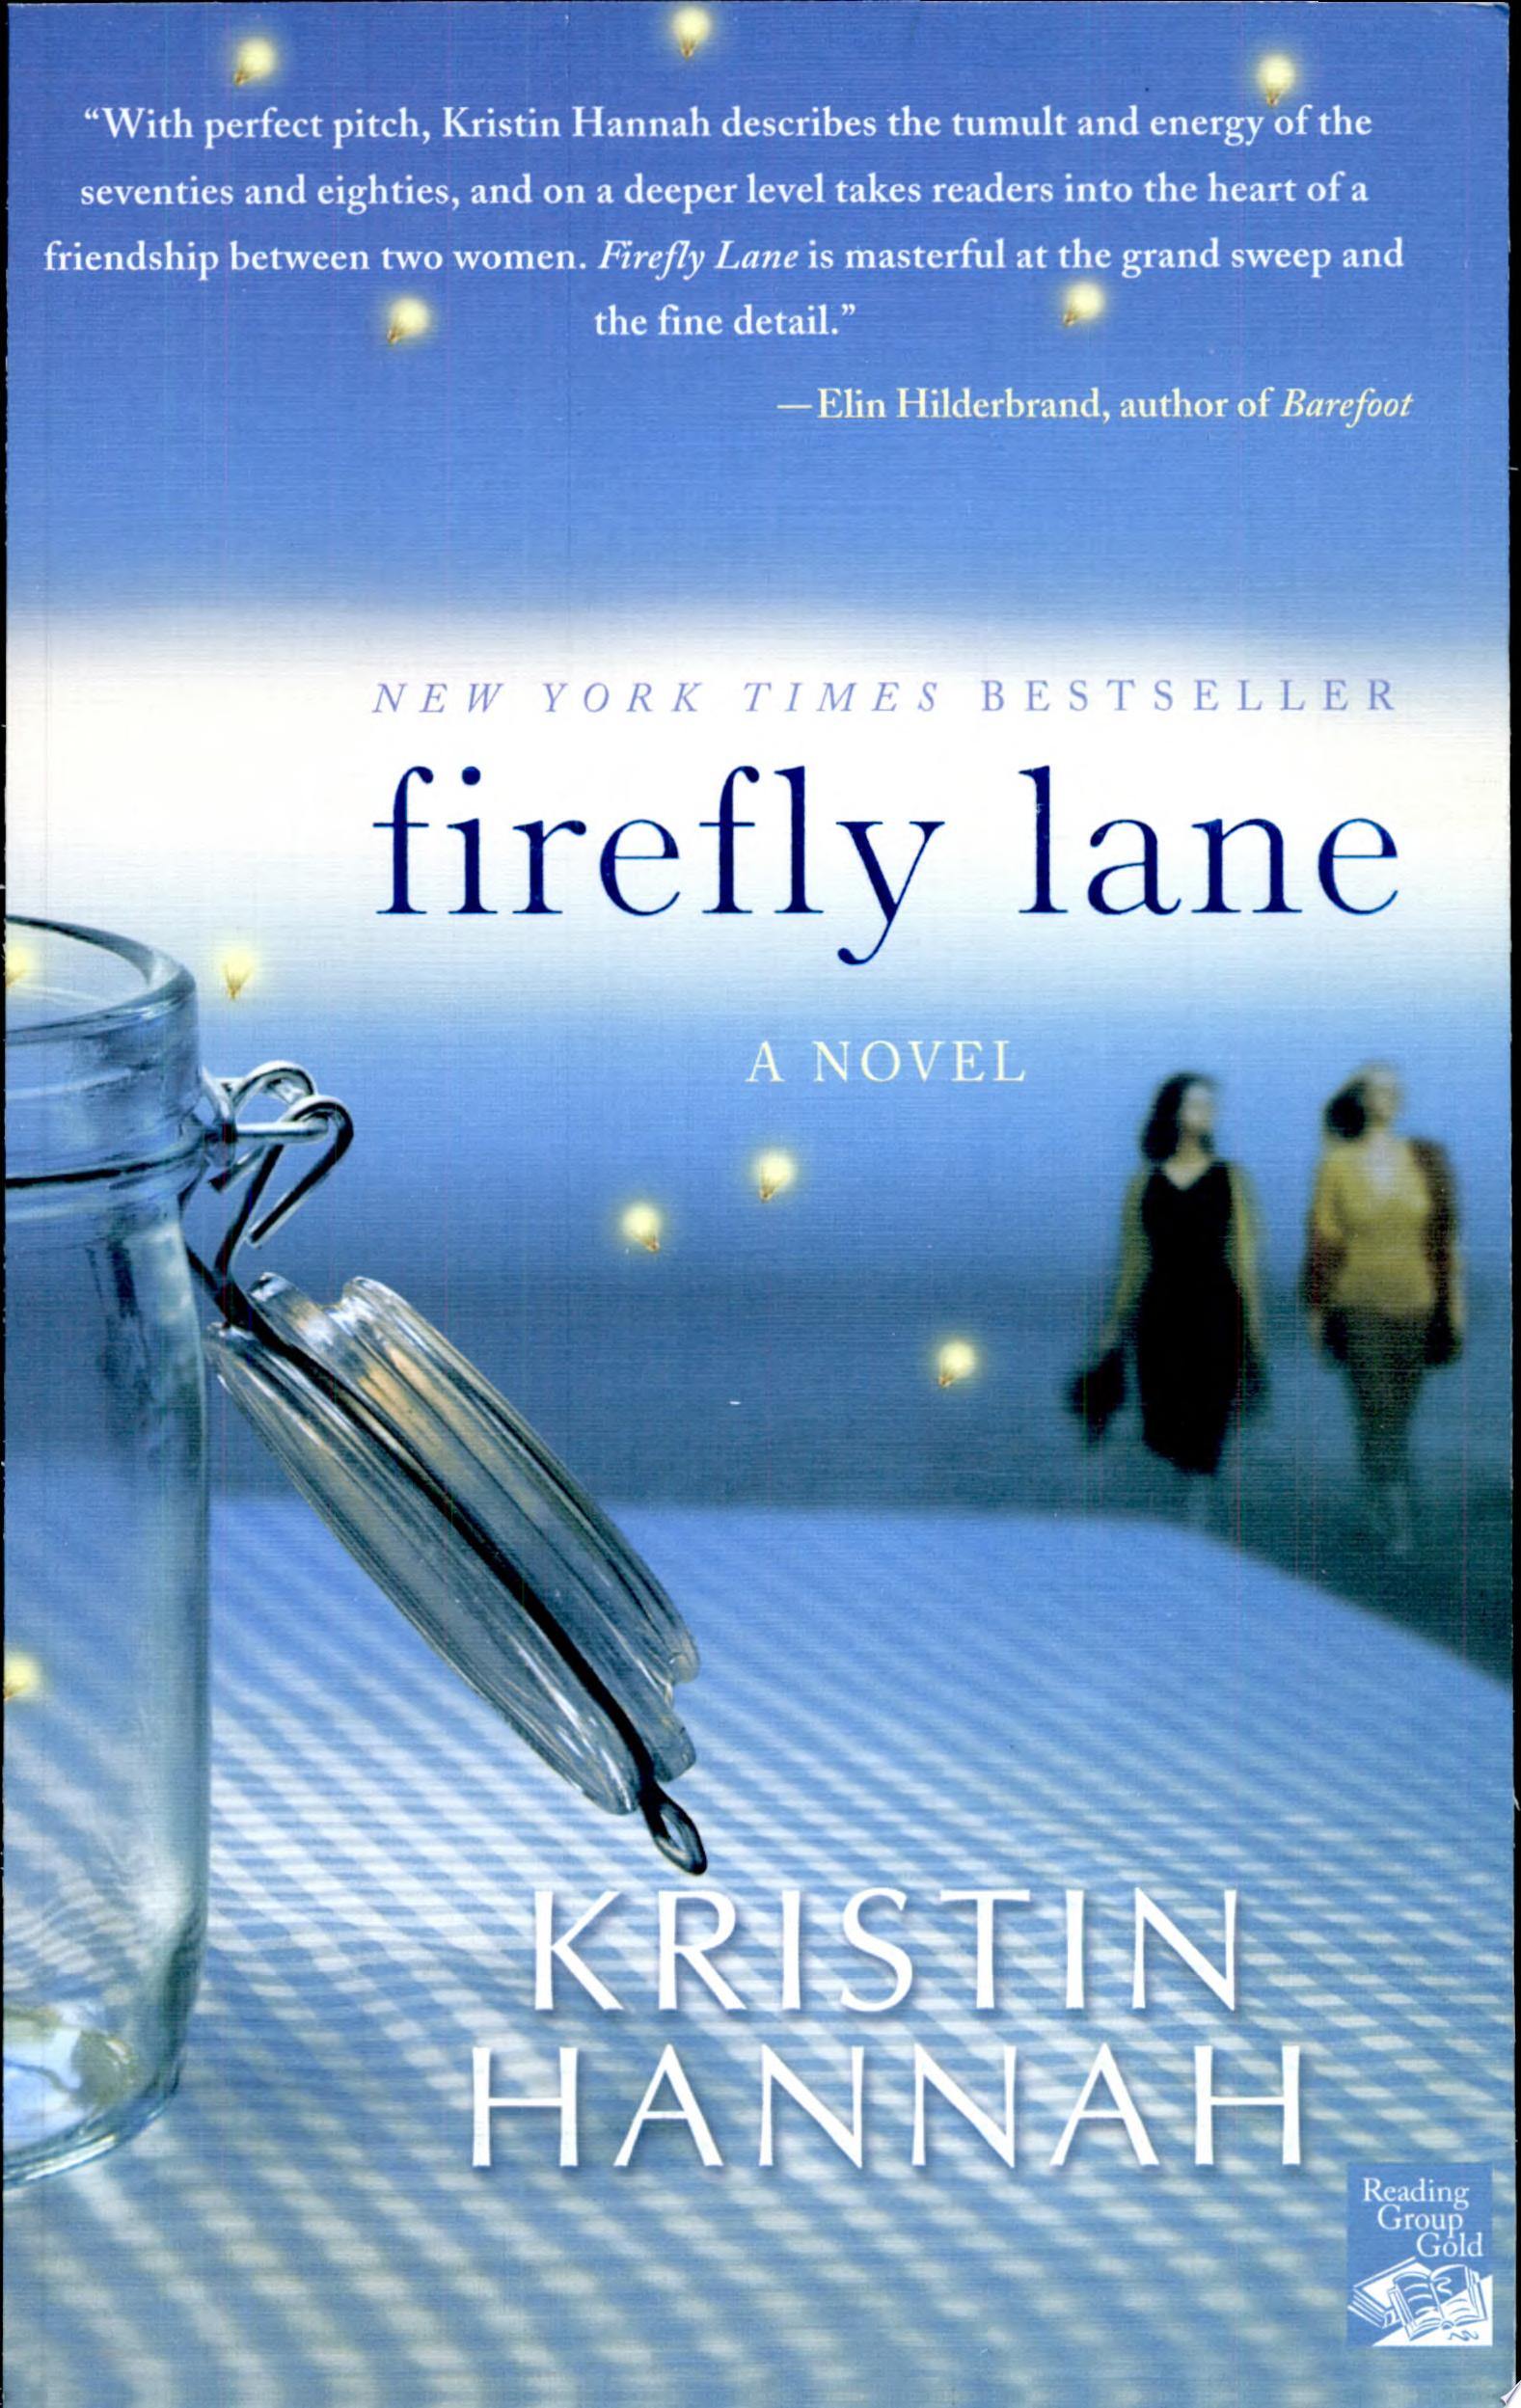 Image for "Firefly Lane"